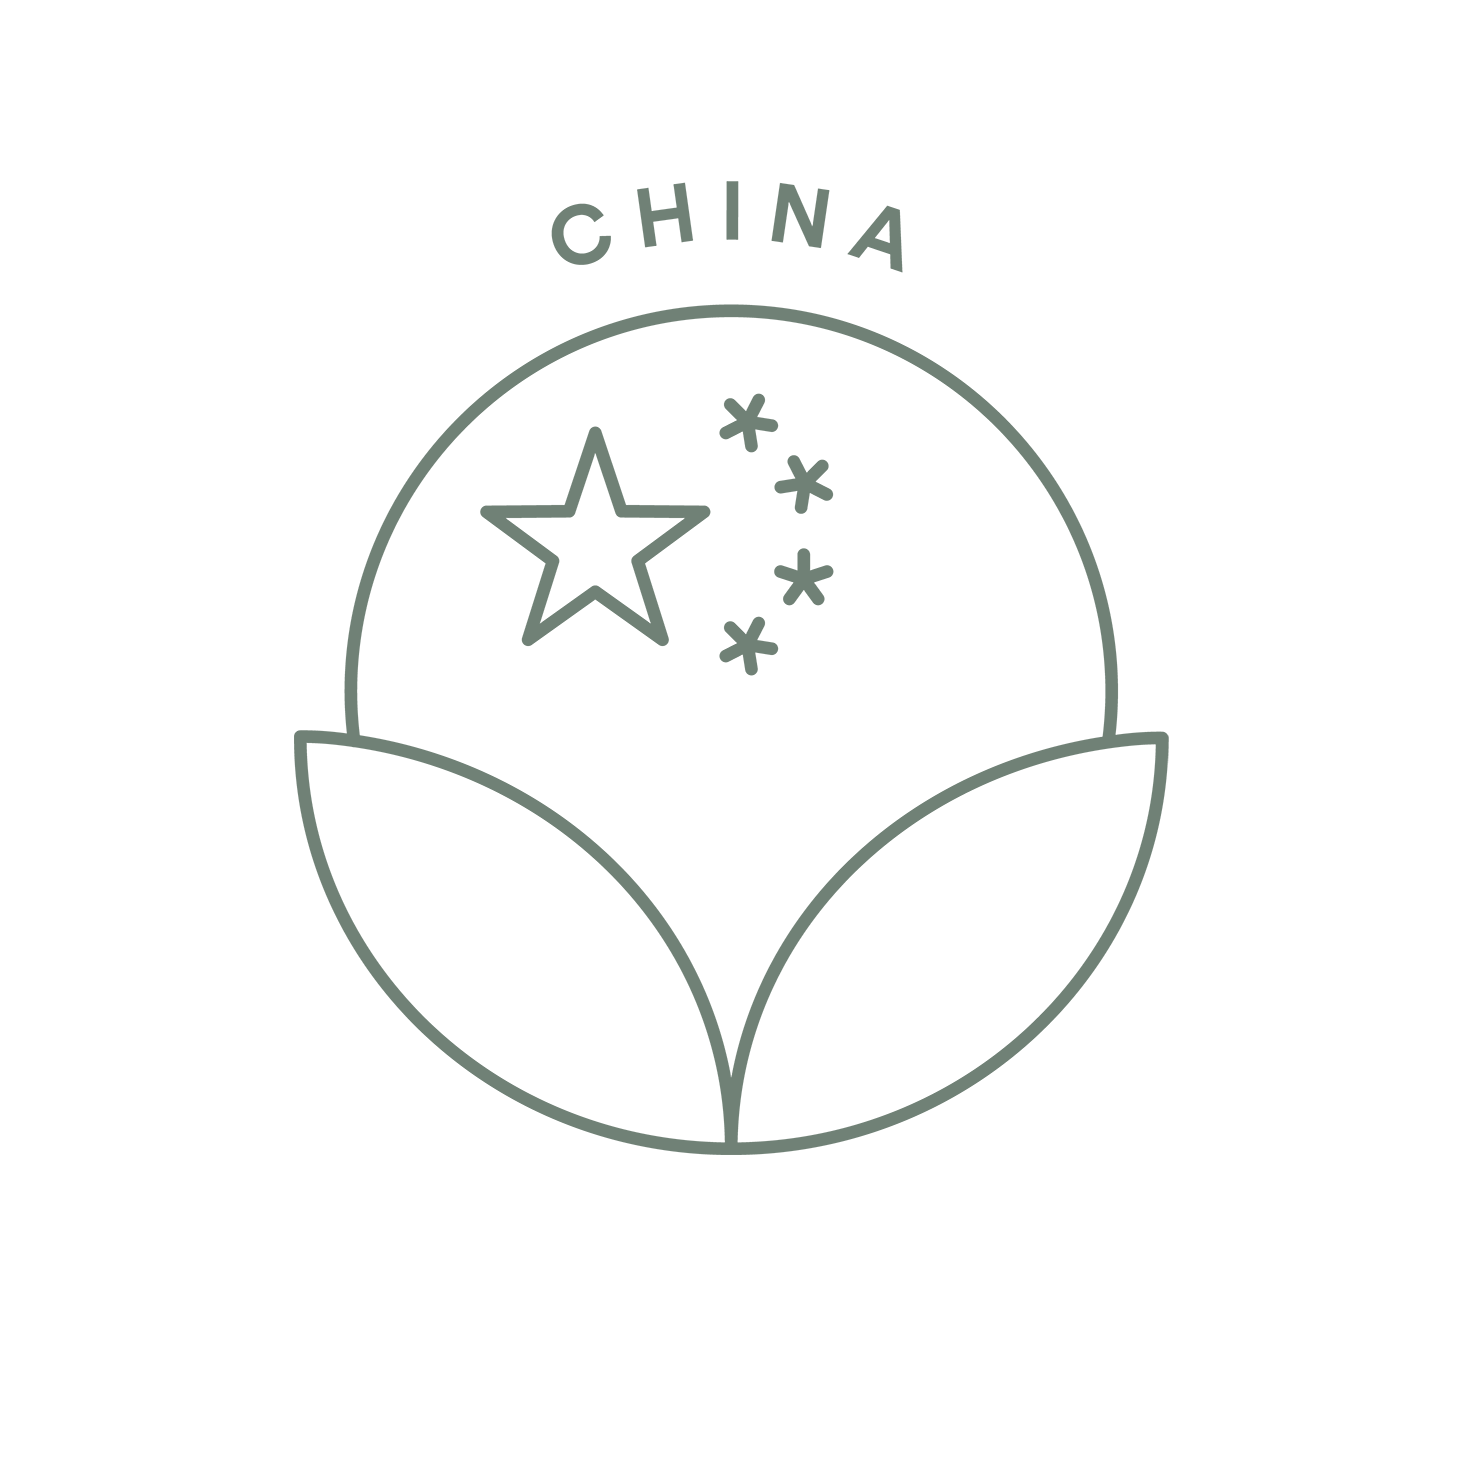 China-WMO